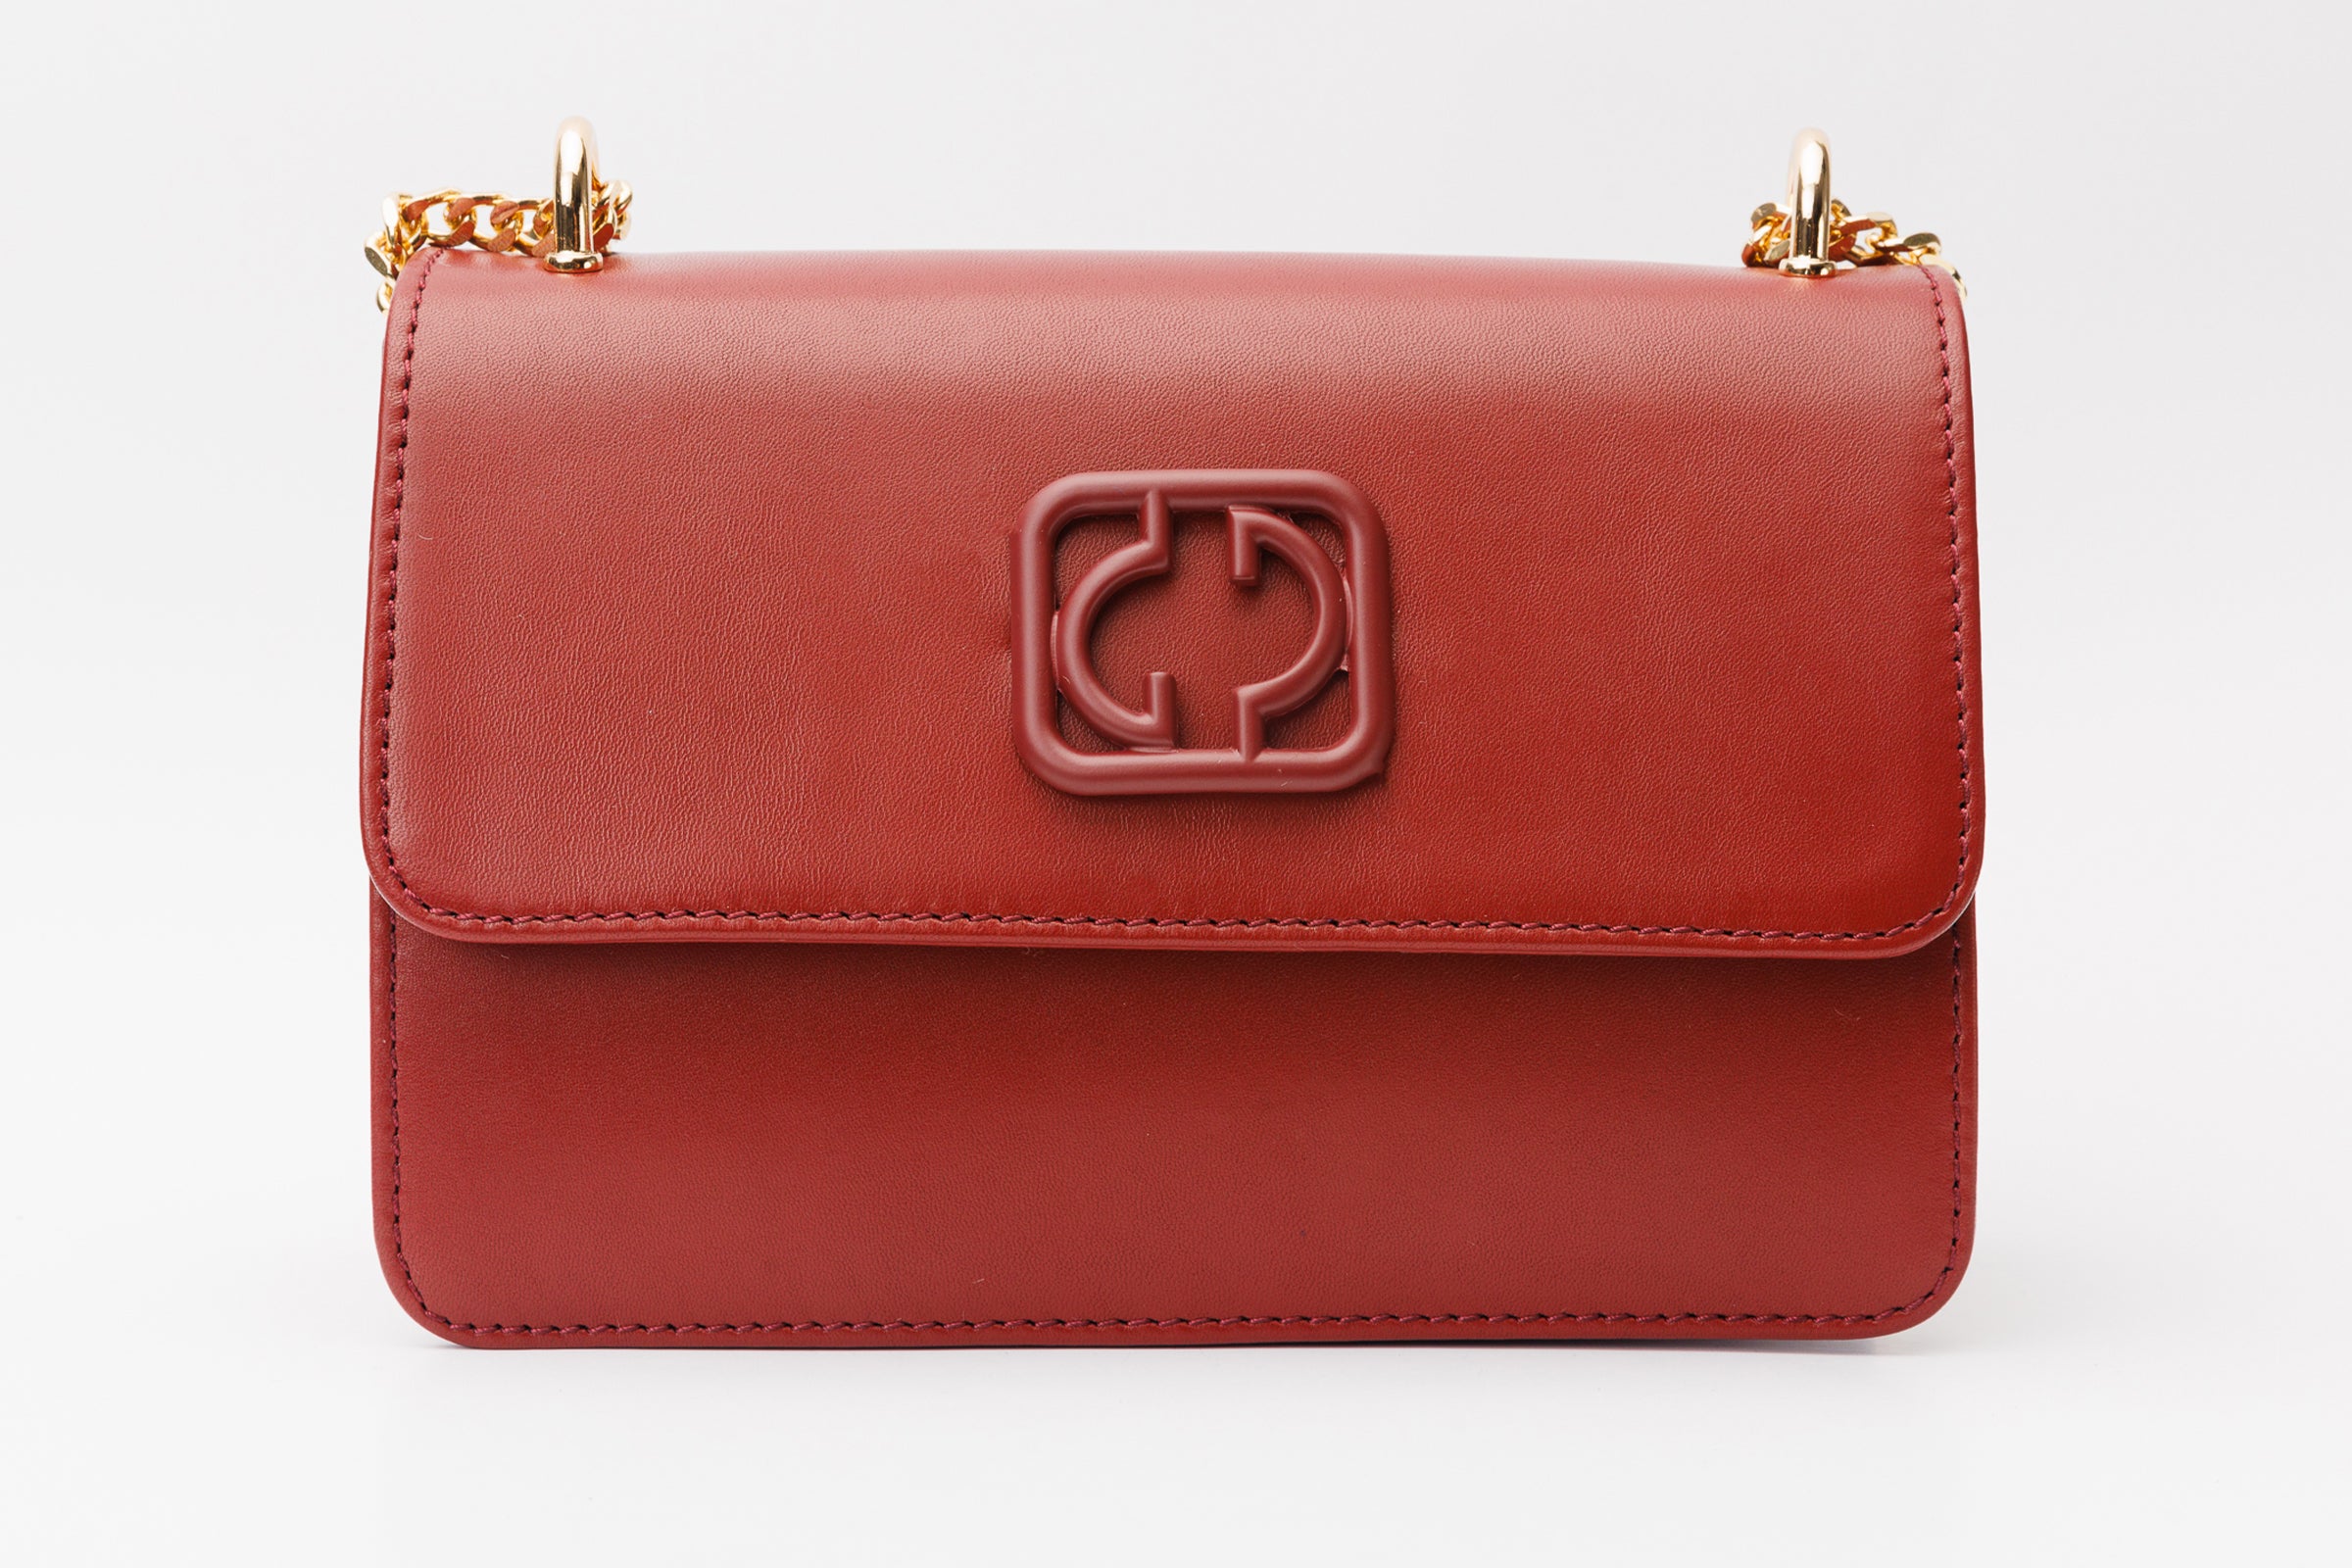 Buy Siri ram purse palace handbag for women pink colour at Amazon.in